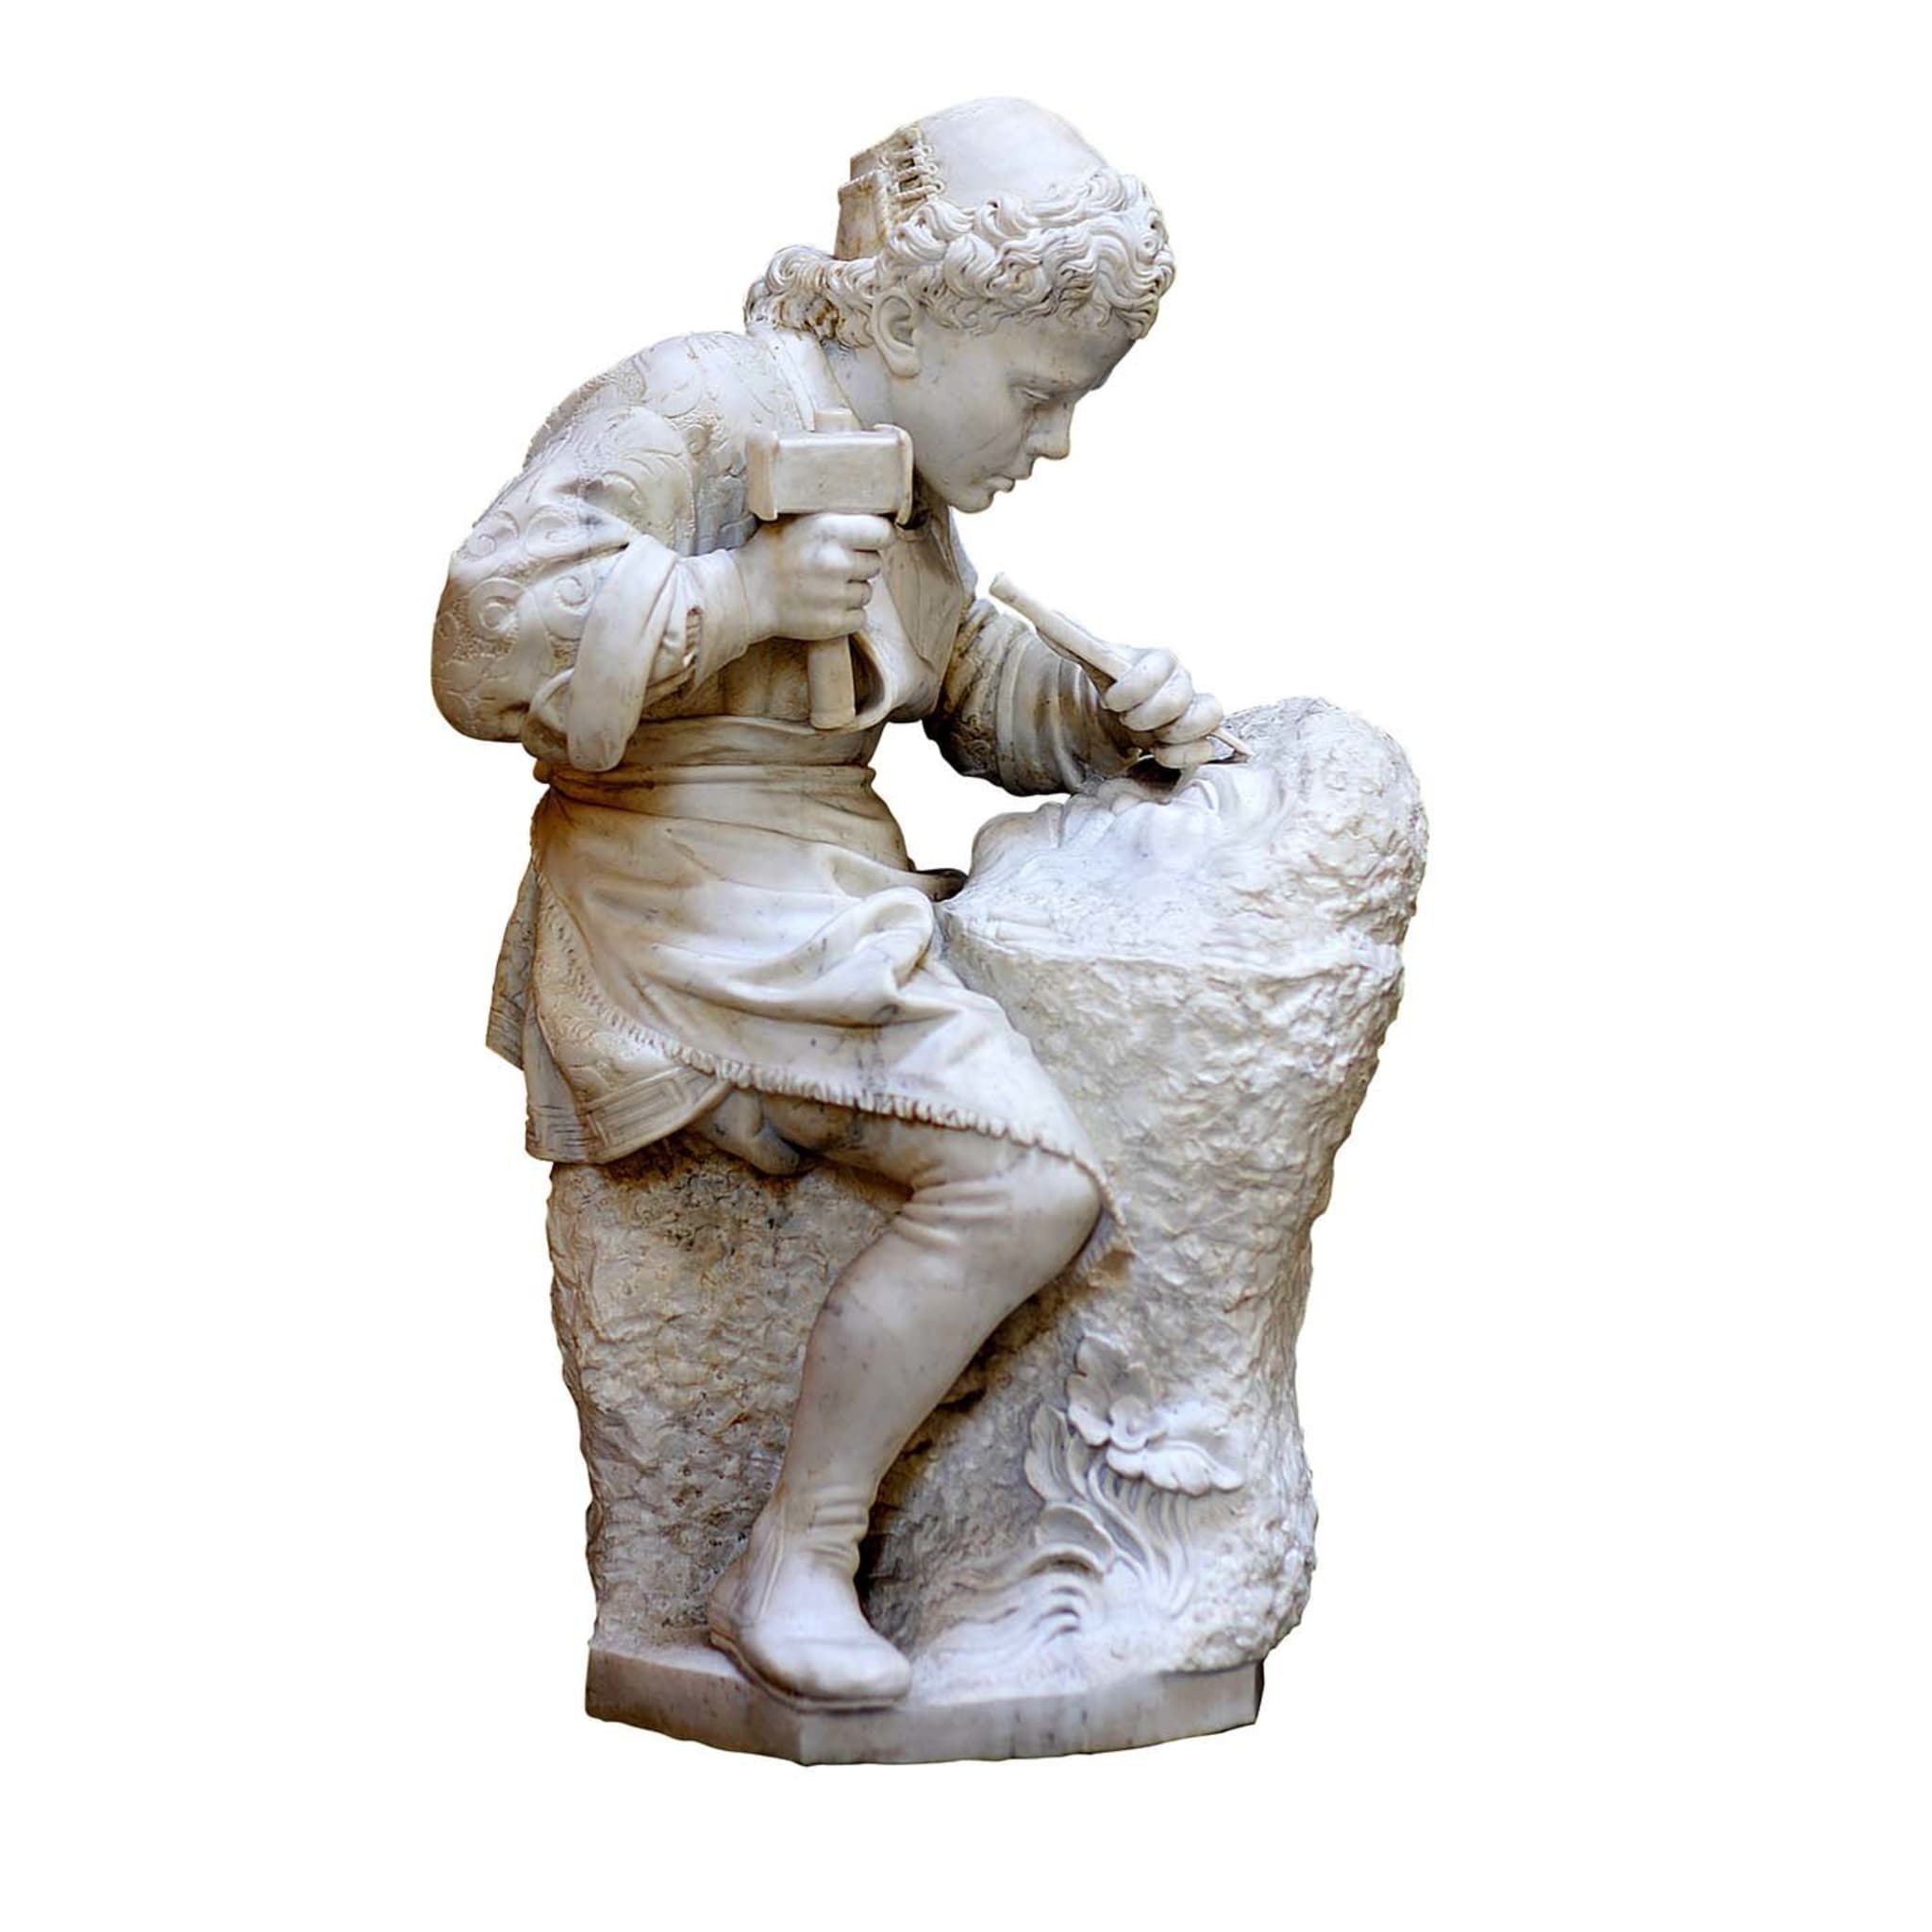 Michelangelo Sculpting the Head of a Fawn Sculpture - Main view